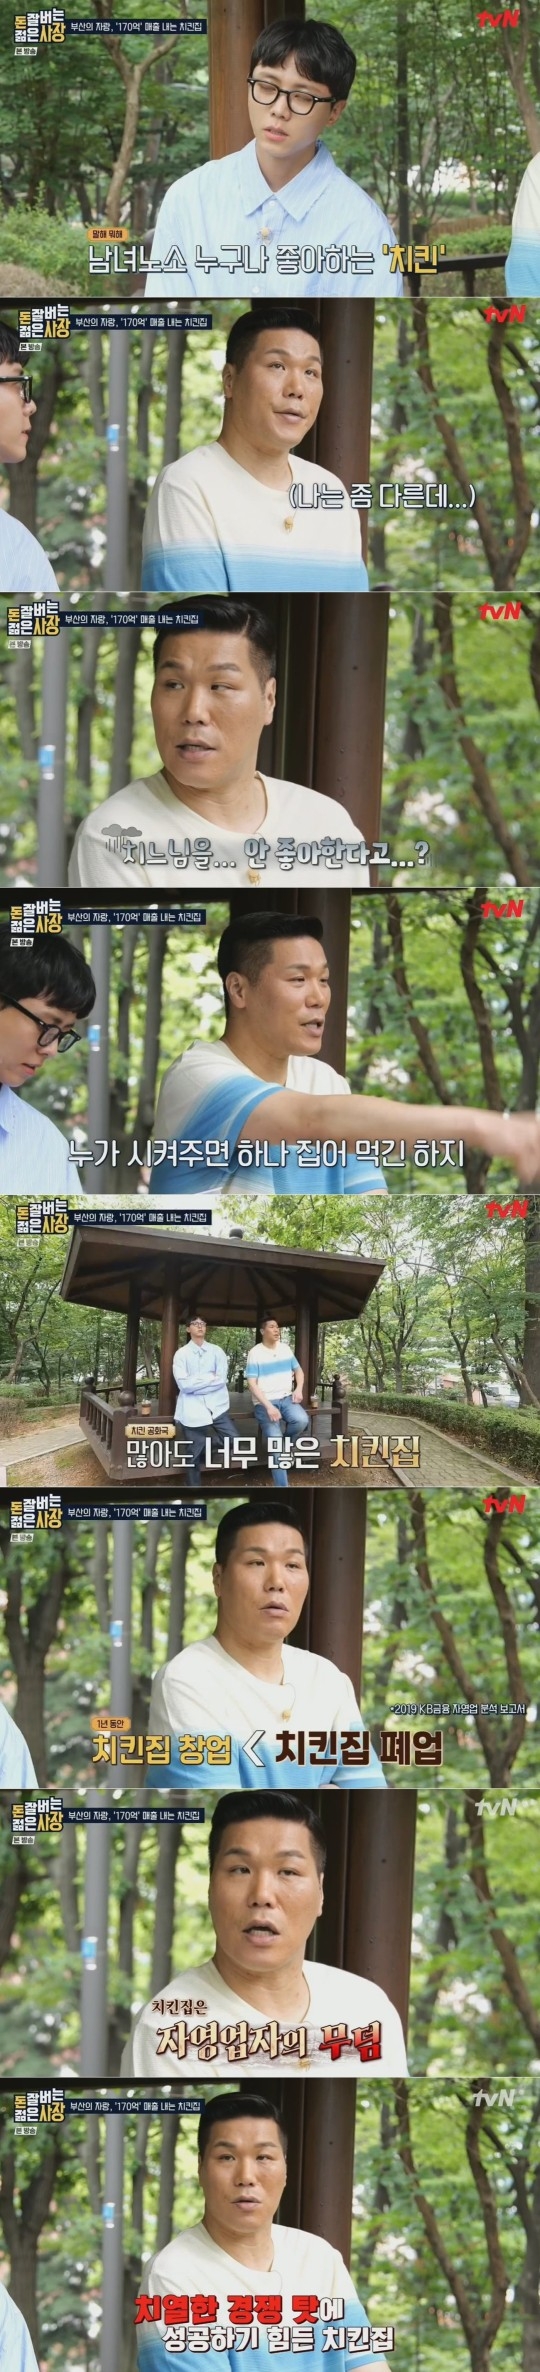 tvN ‘돈 잘 버는 젊은 사장’ 캡처